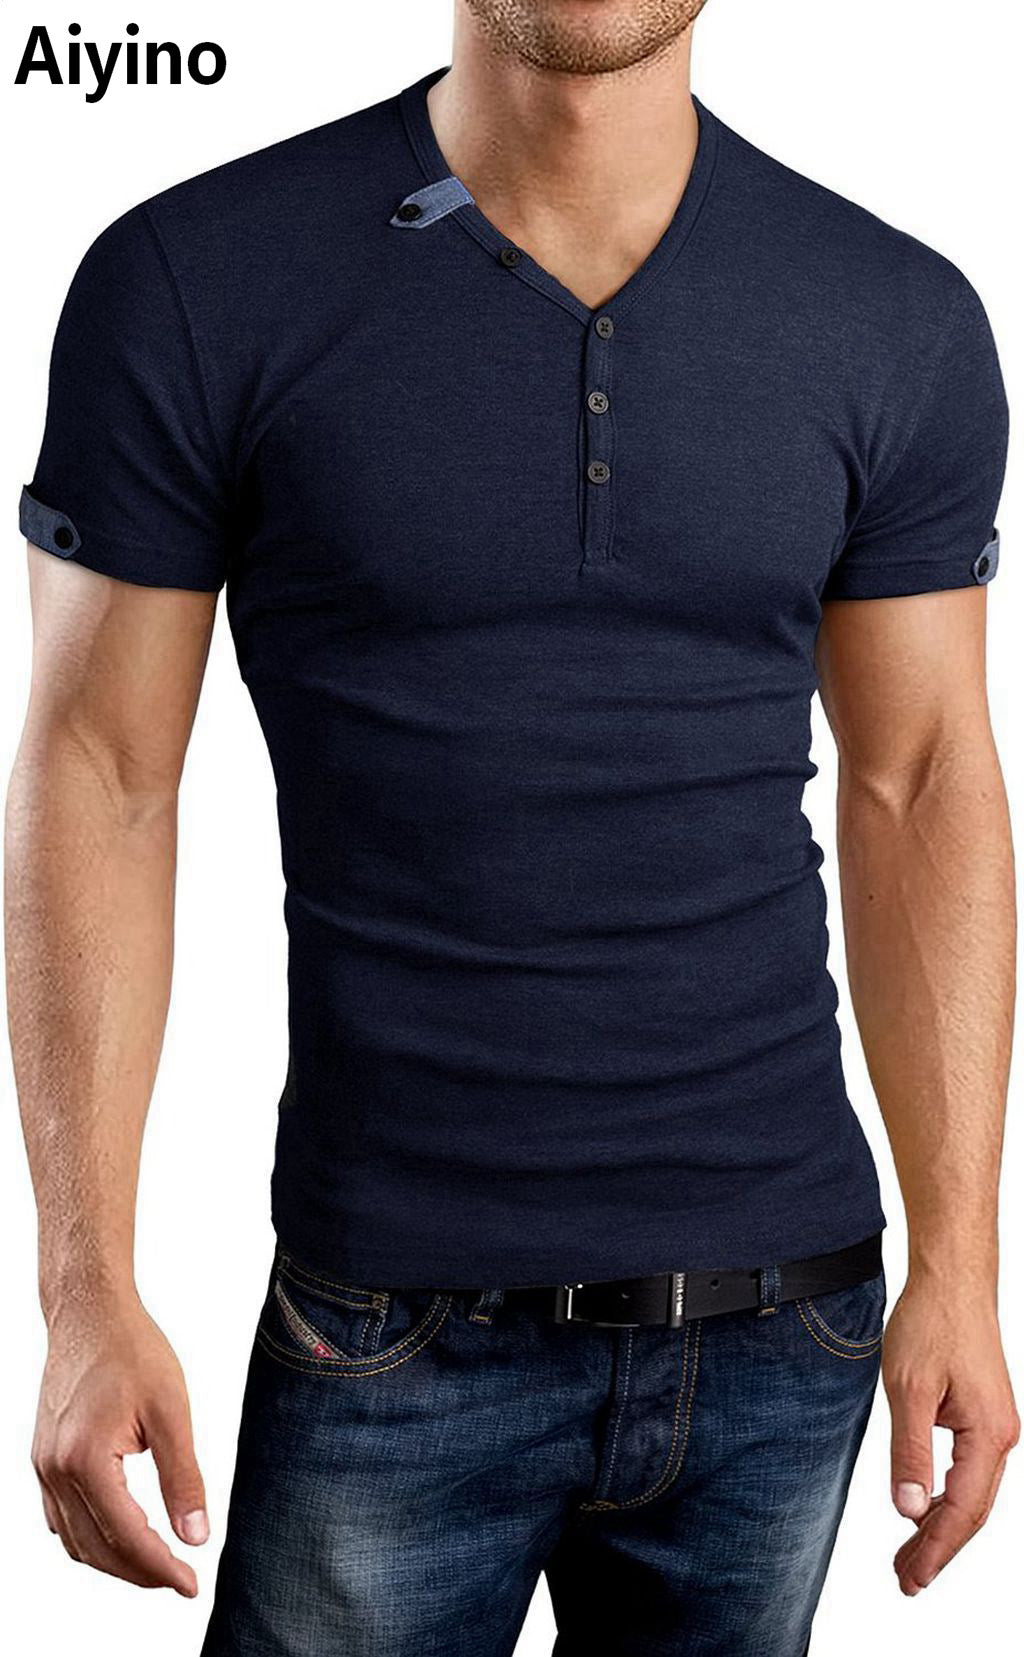 Aiyino Men's Casual V-Neck Button Cuffs Cardigan Short Sleeve T-Shirts ...